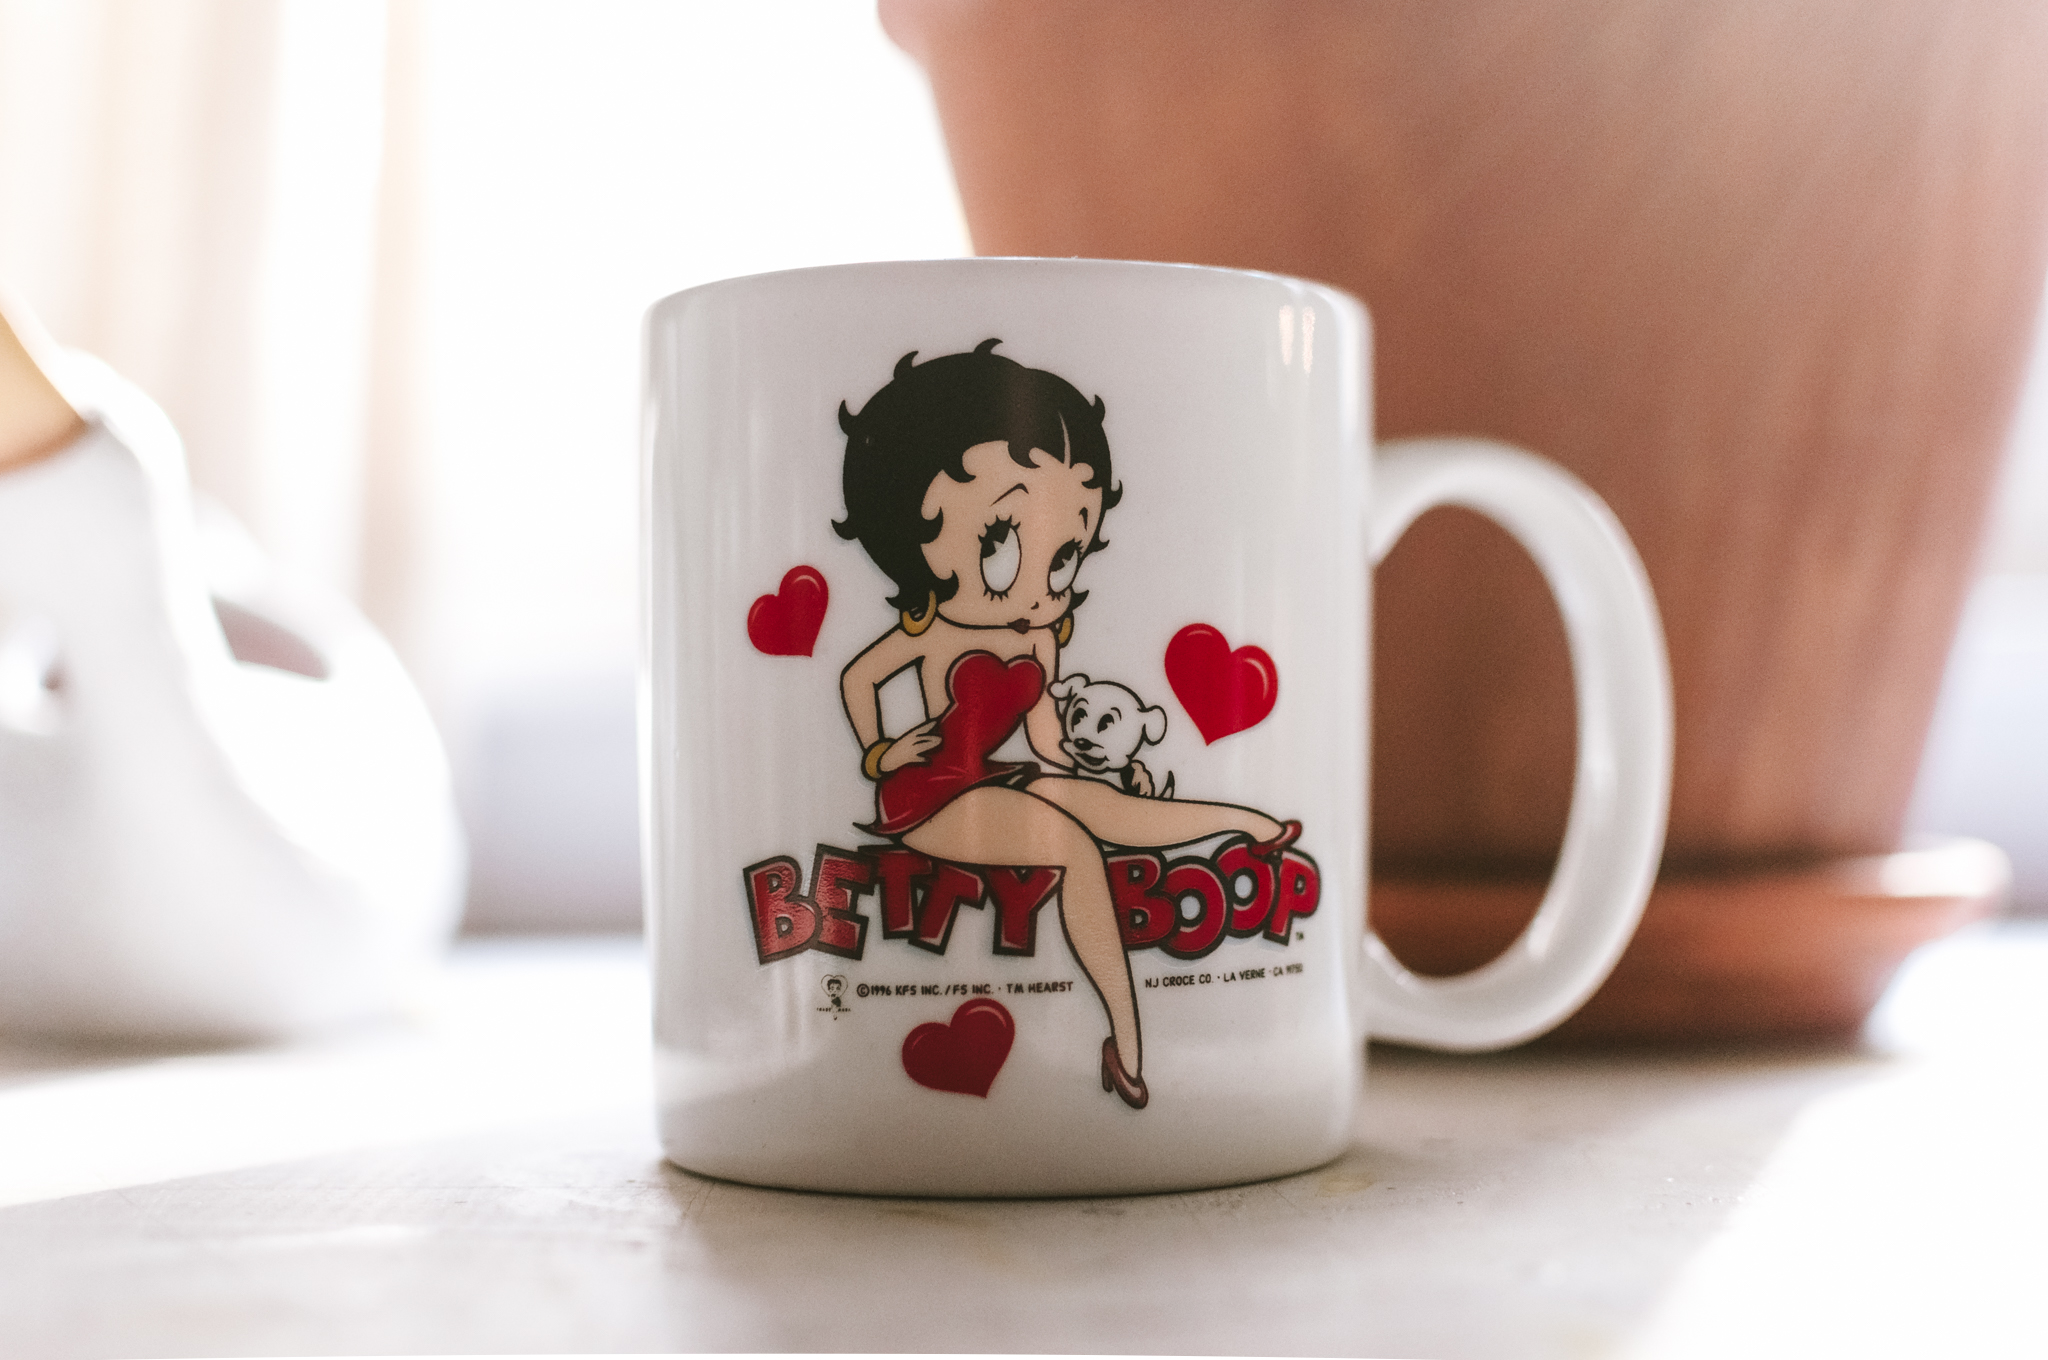 Betty Boop - Star Line - Ceramic Mug (2003)